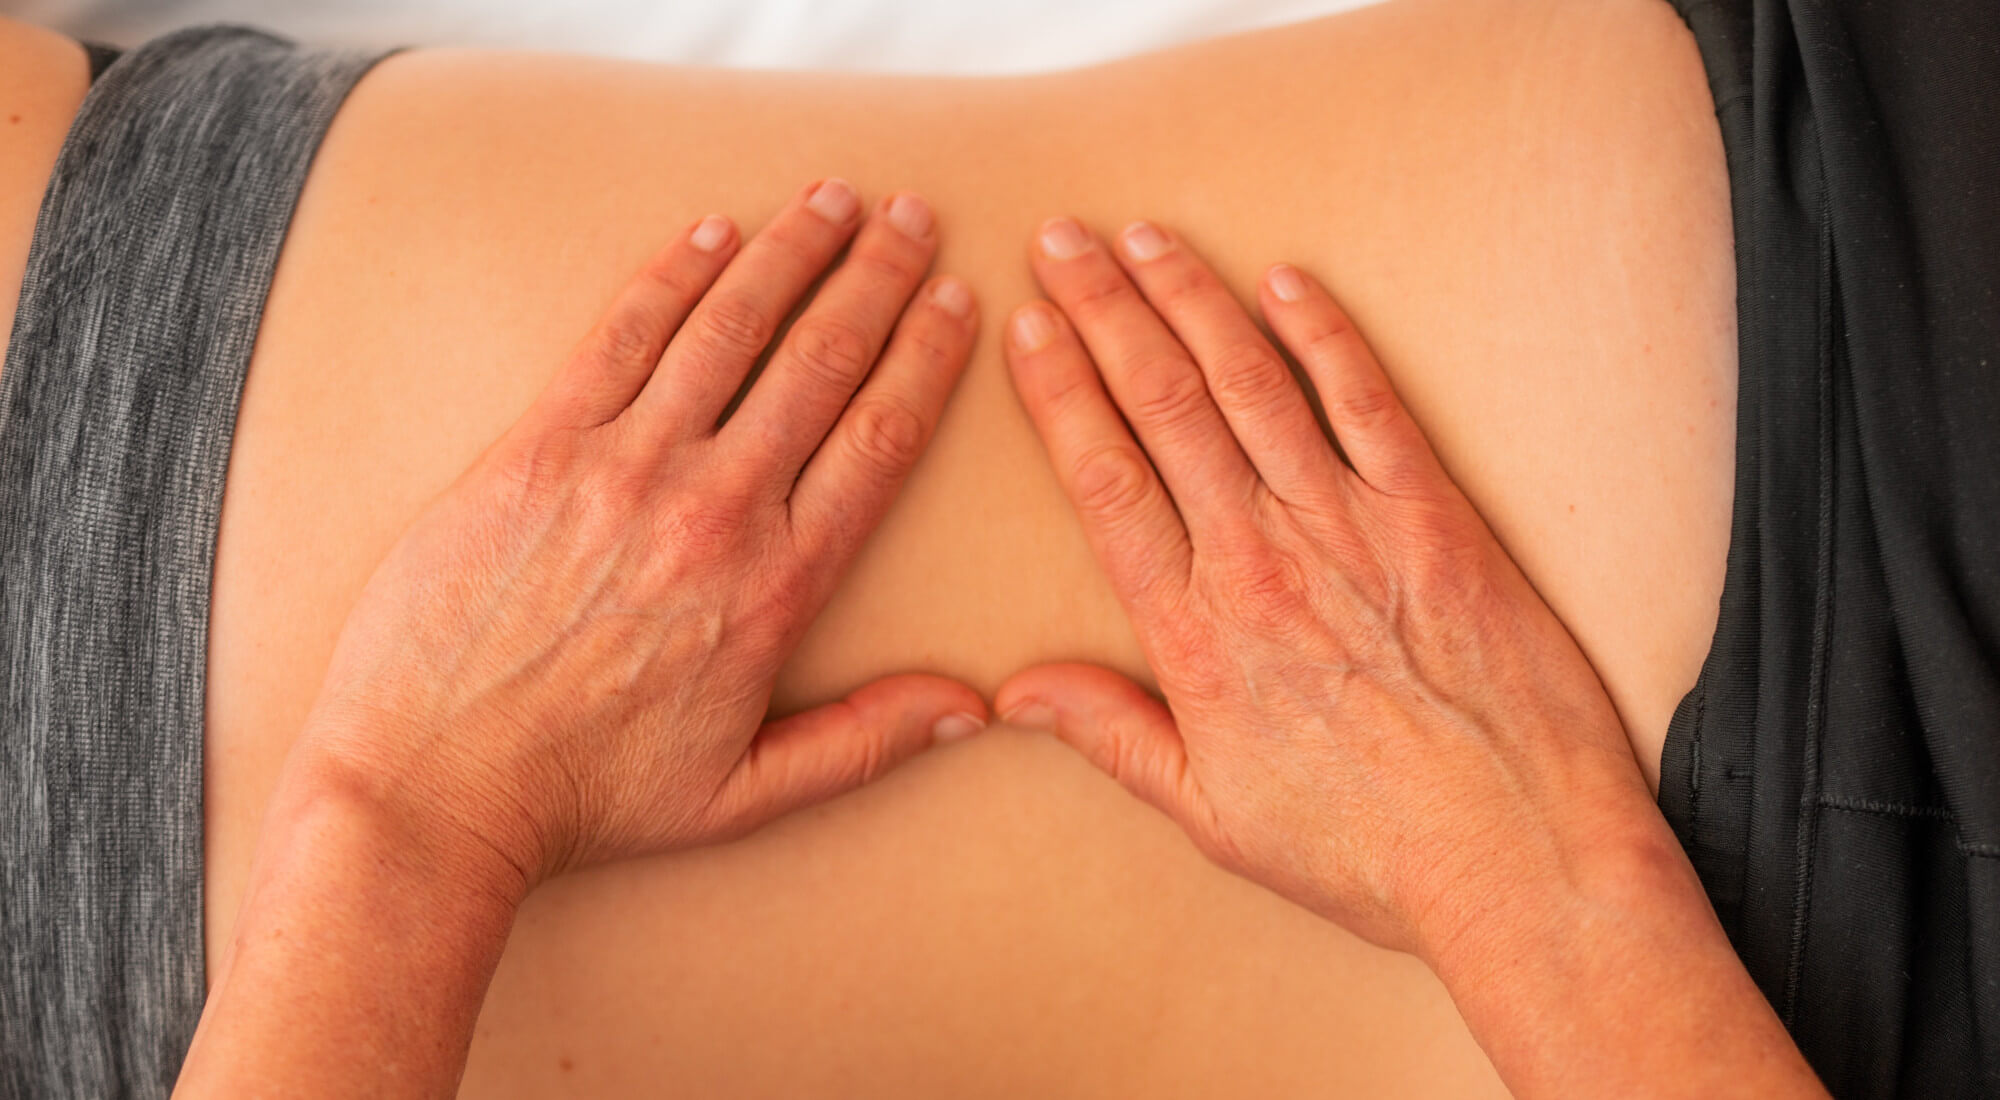 massage-pain-relief